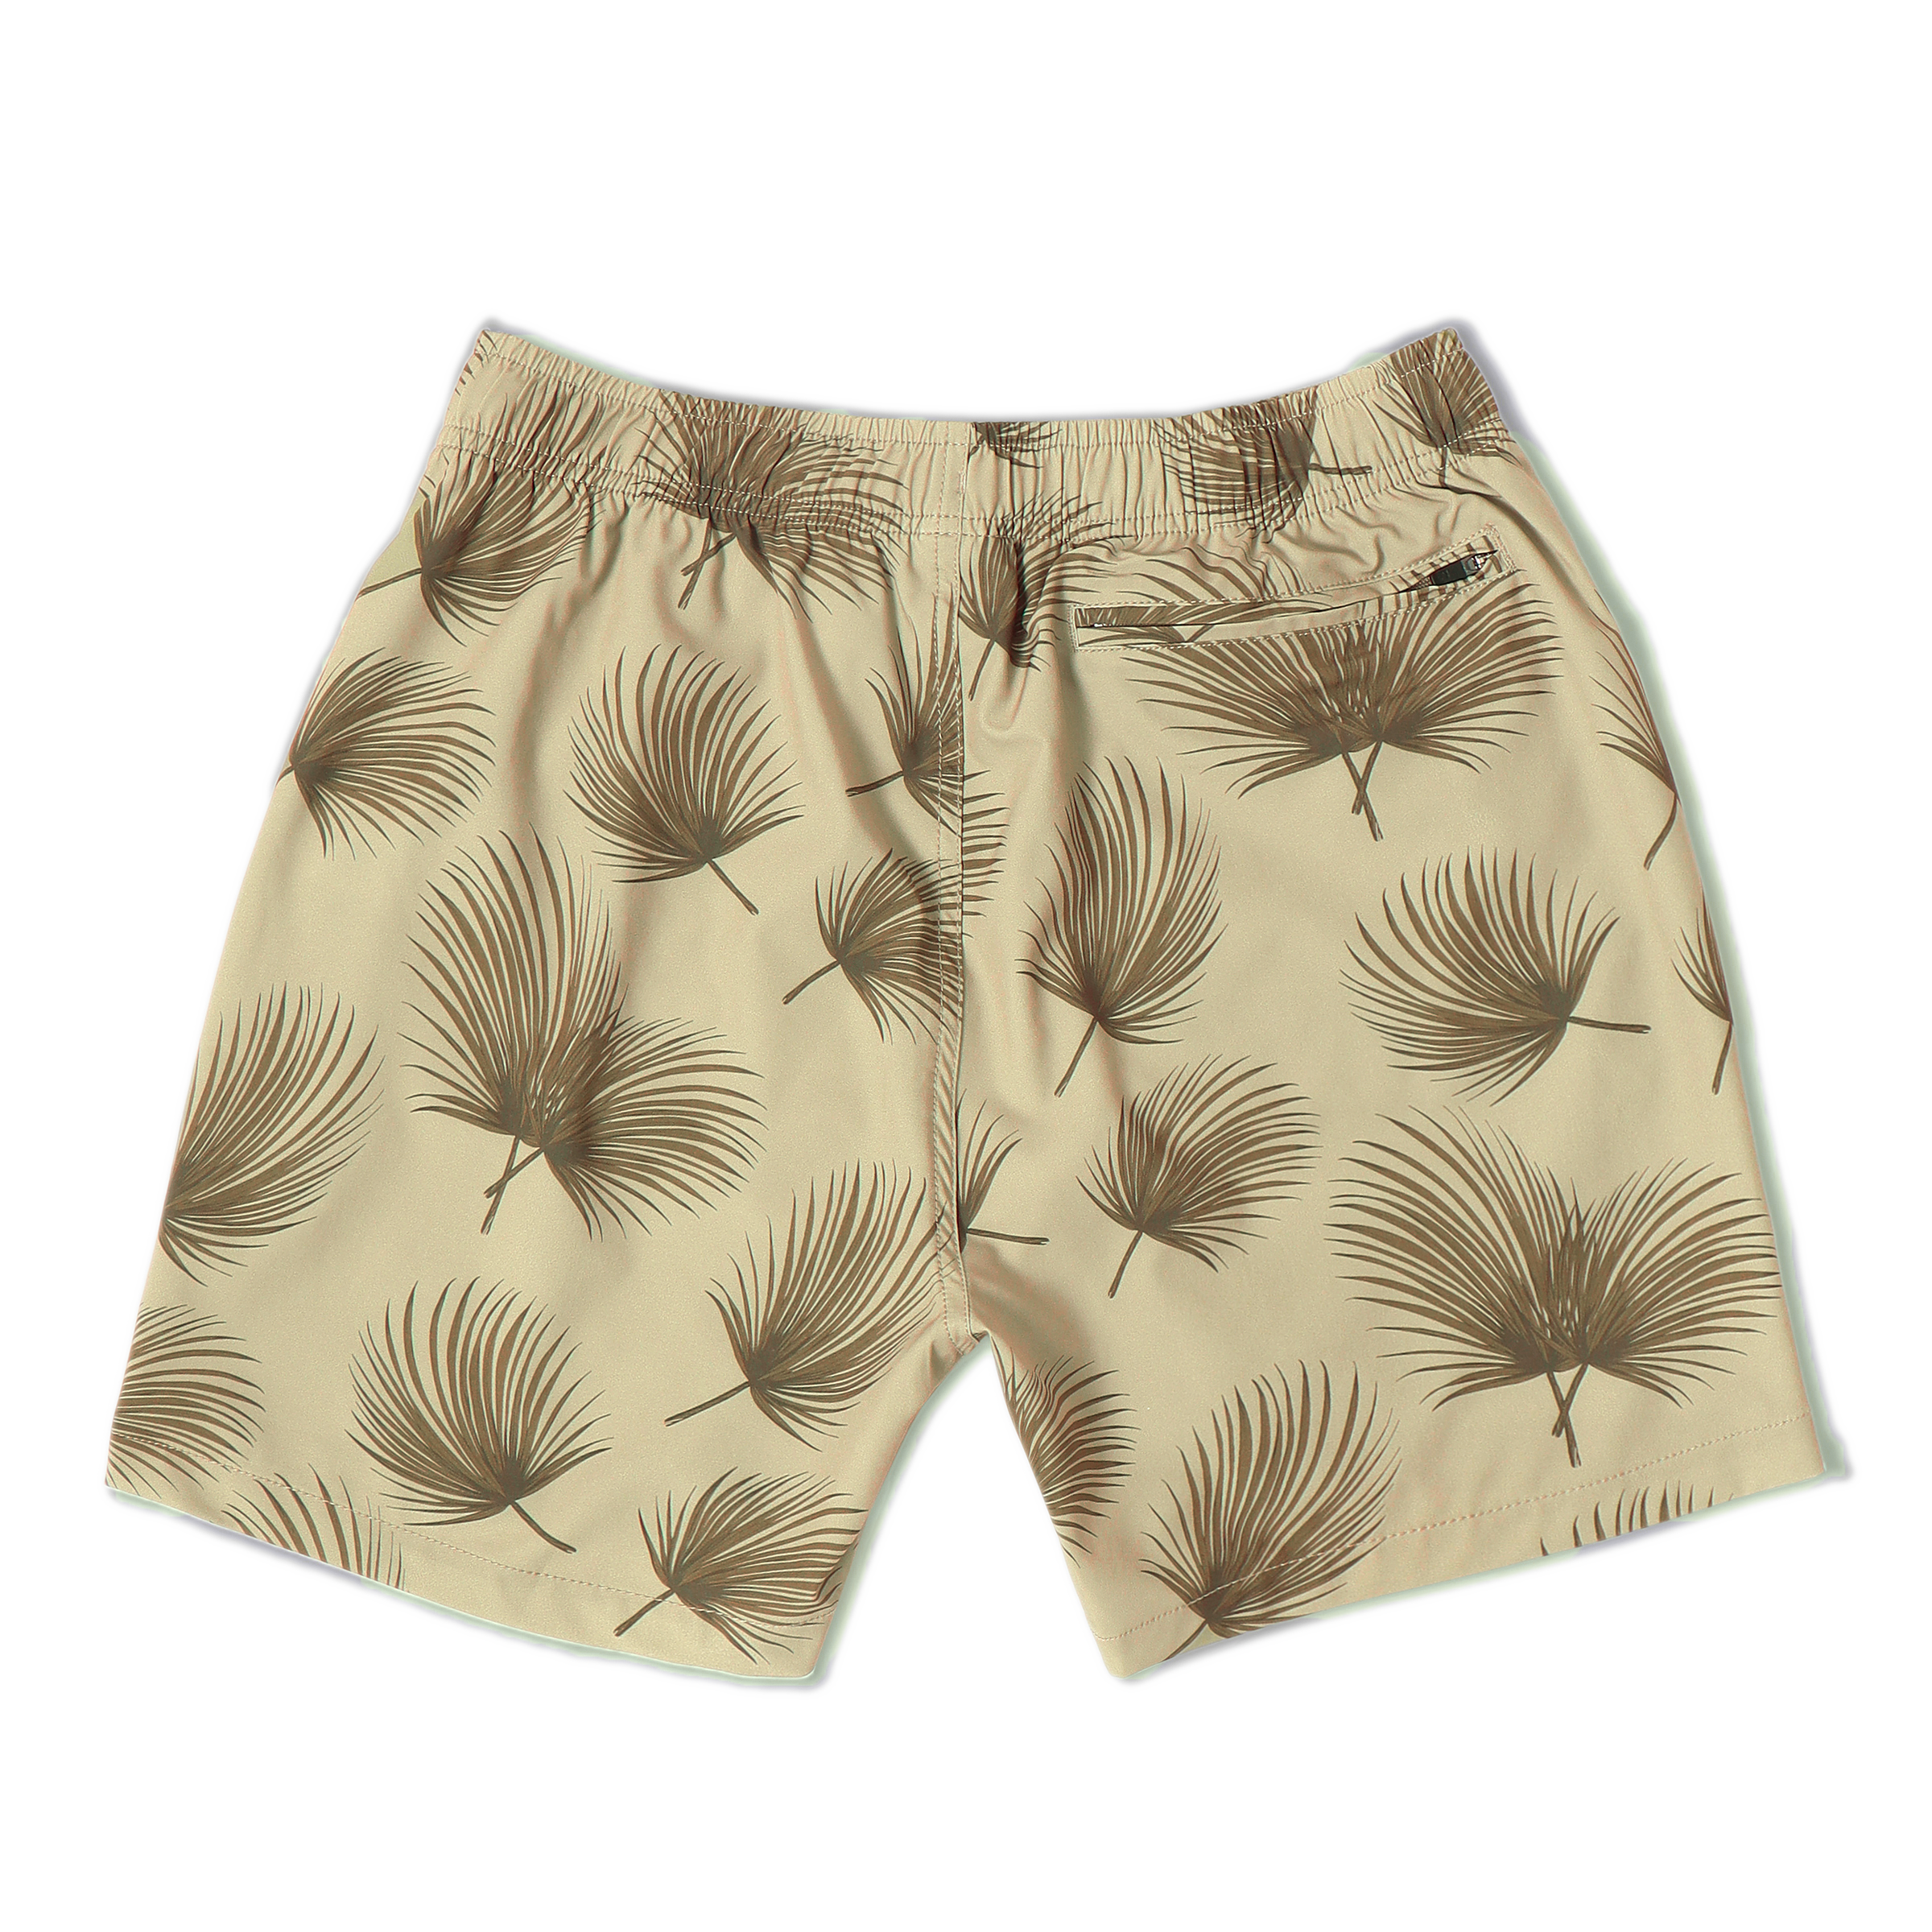 Stretch Swim 5.5" Coastal Shade back with an elastic waistband and back right zippered pocket